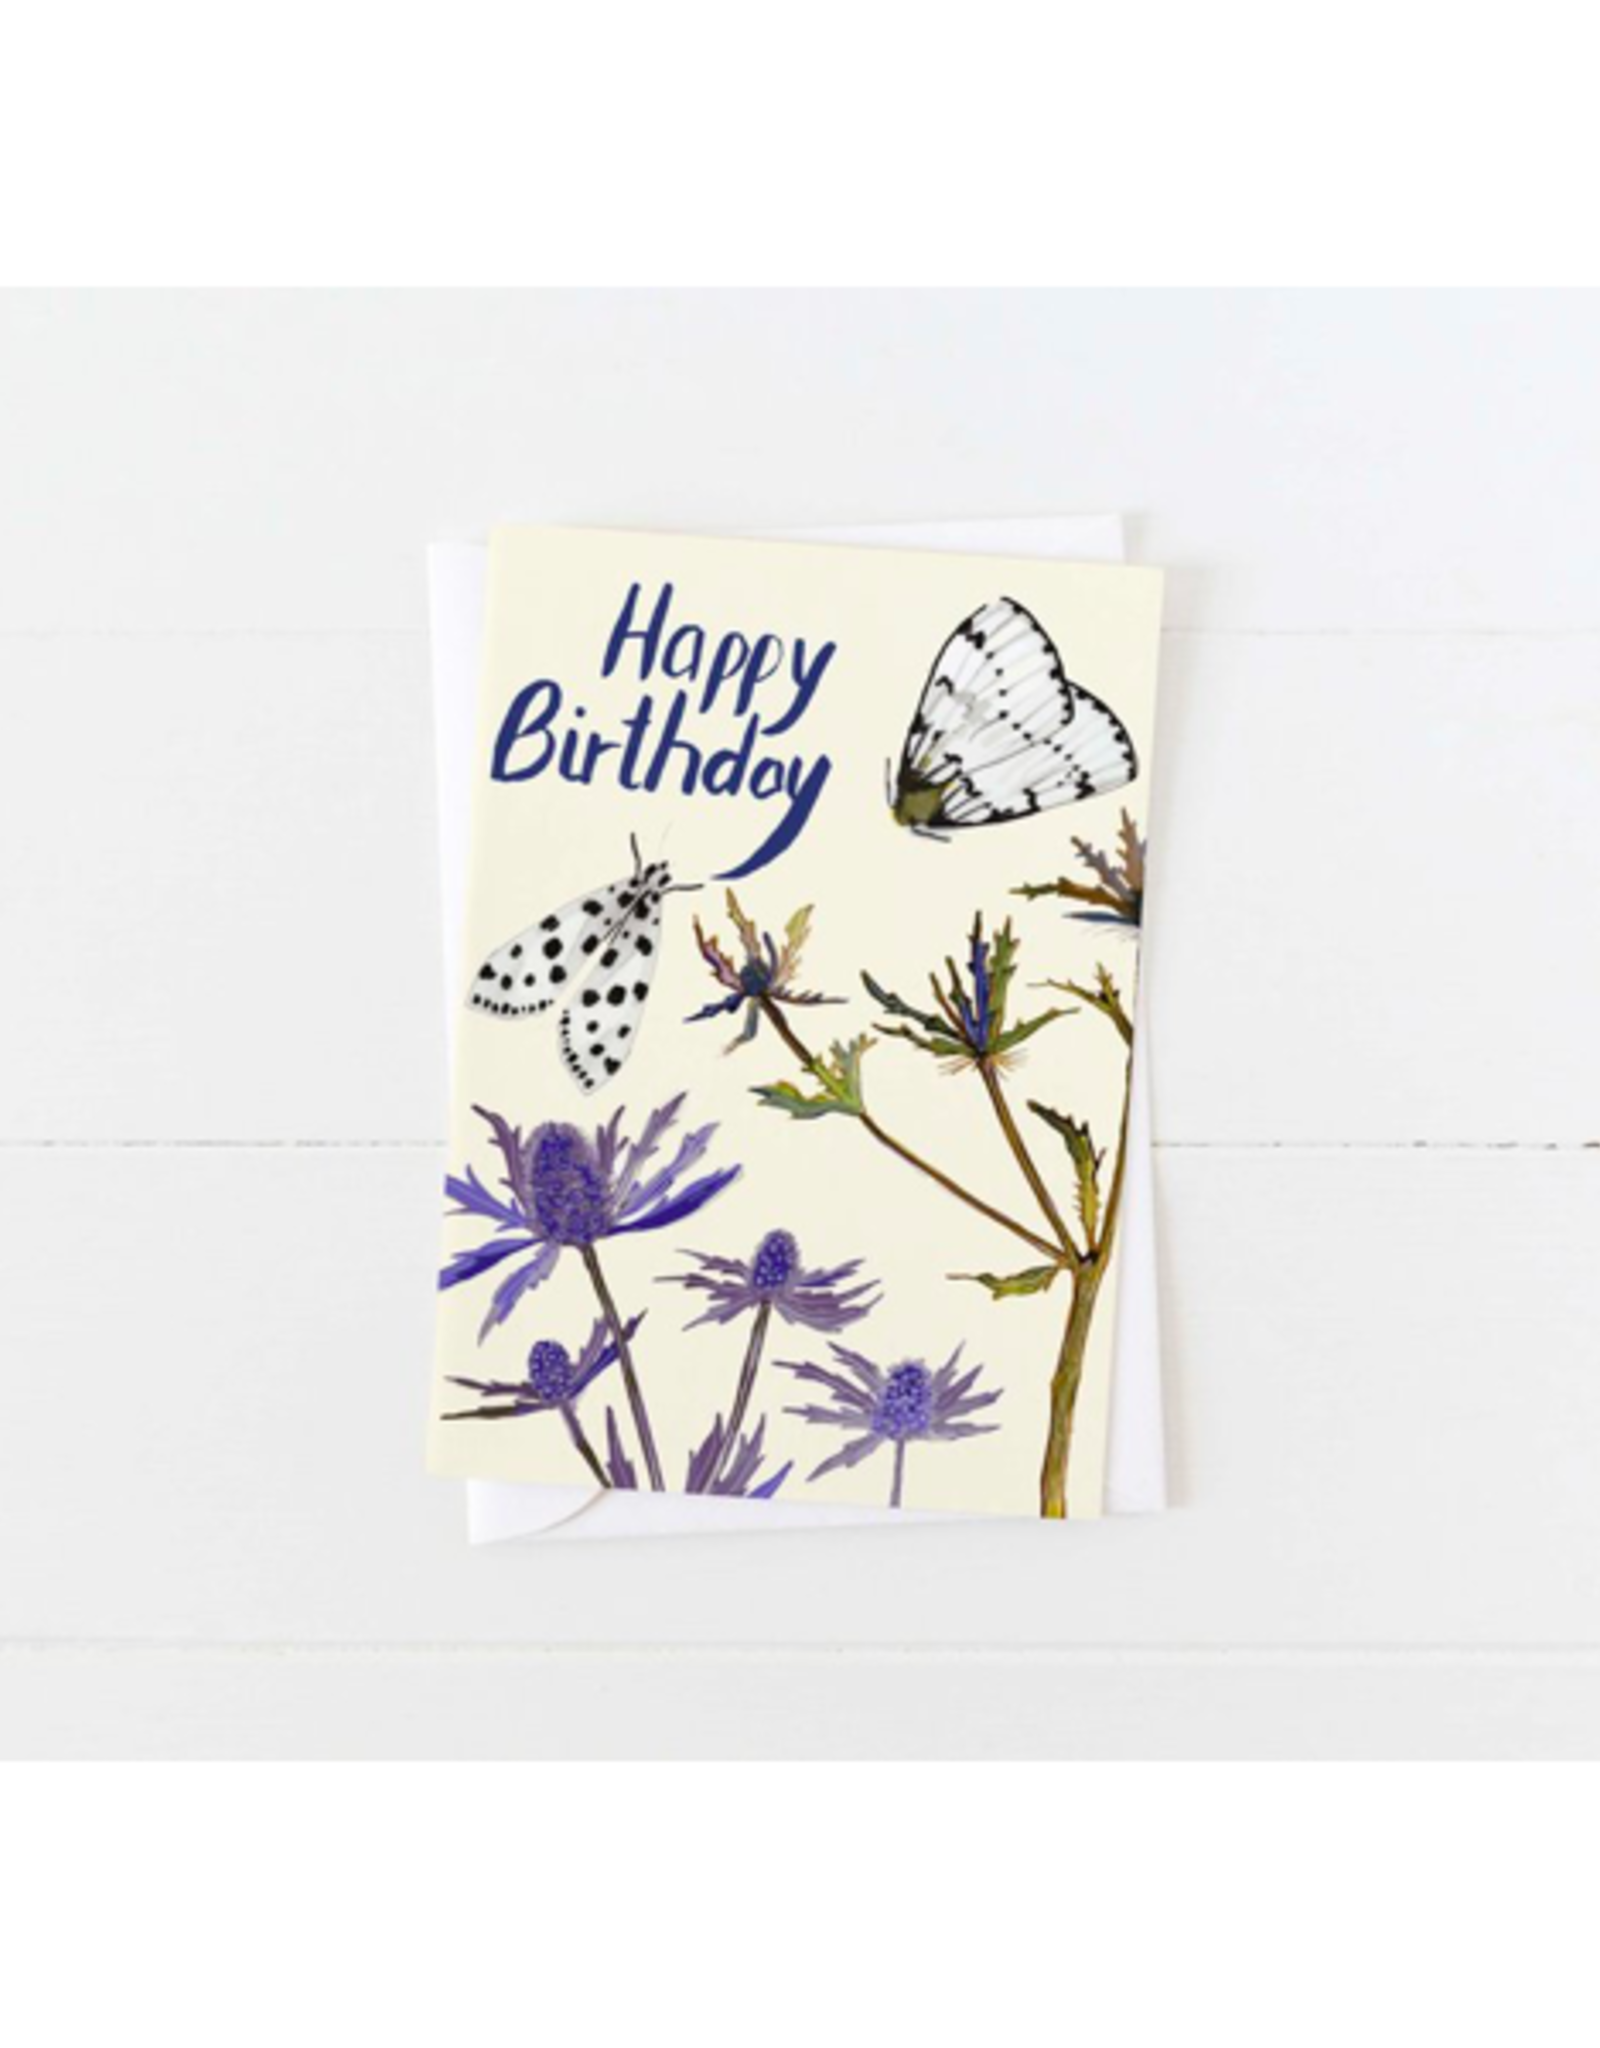 TIMCo Briana Corr Scott - Card / Happy Birthday with Moths, 4 x 6"